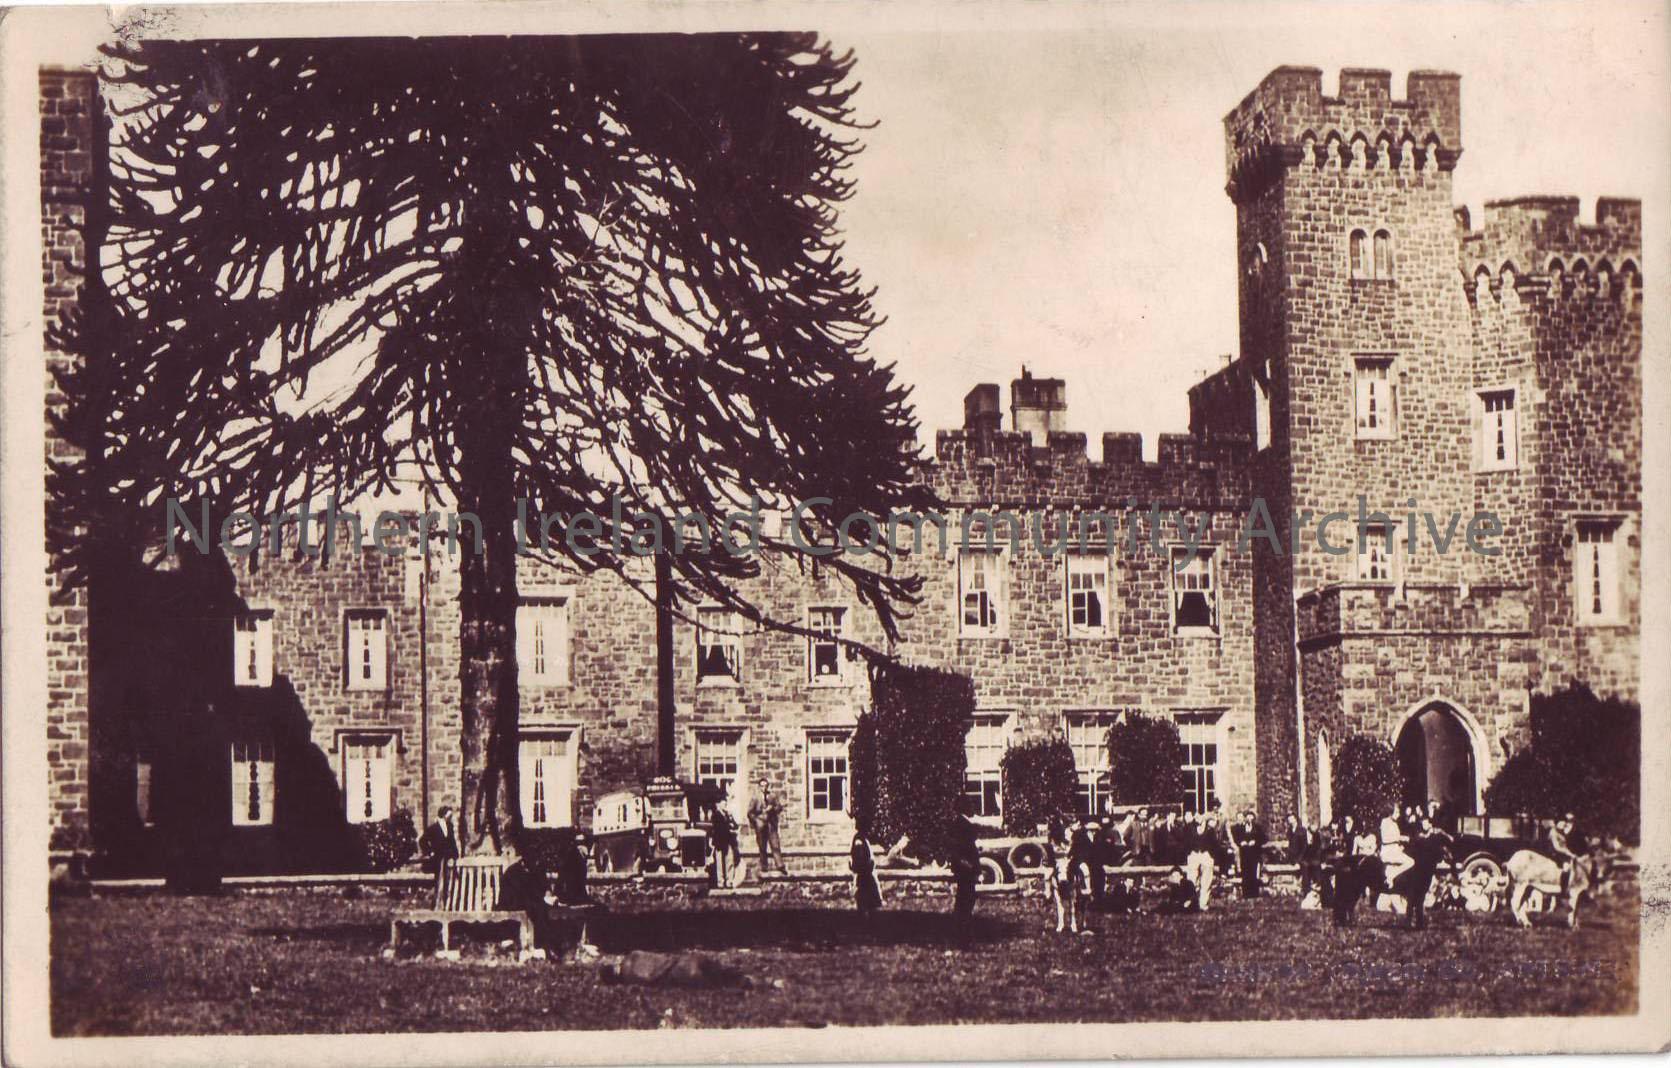 Garron castle or tower